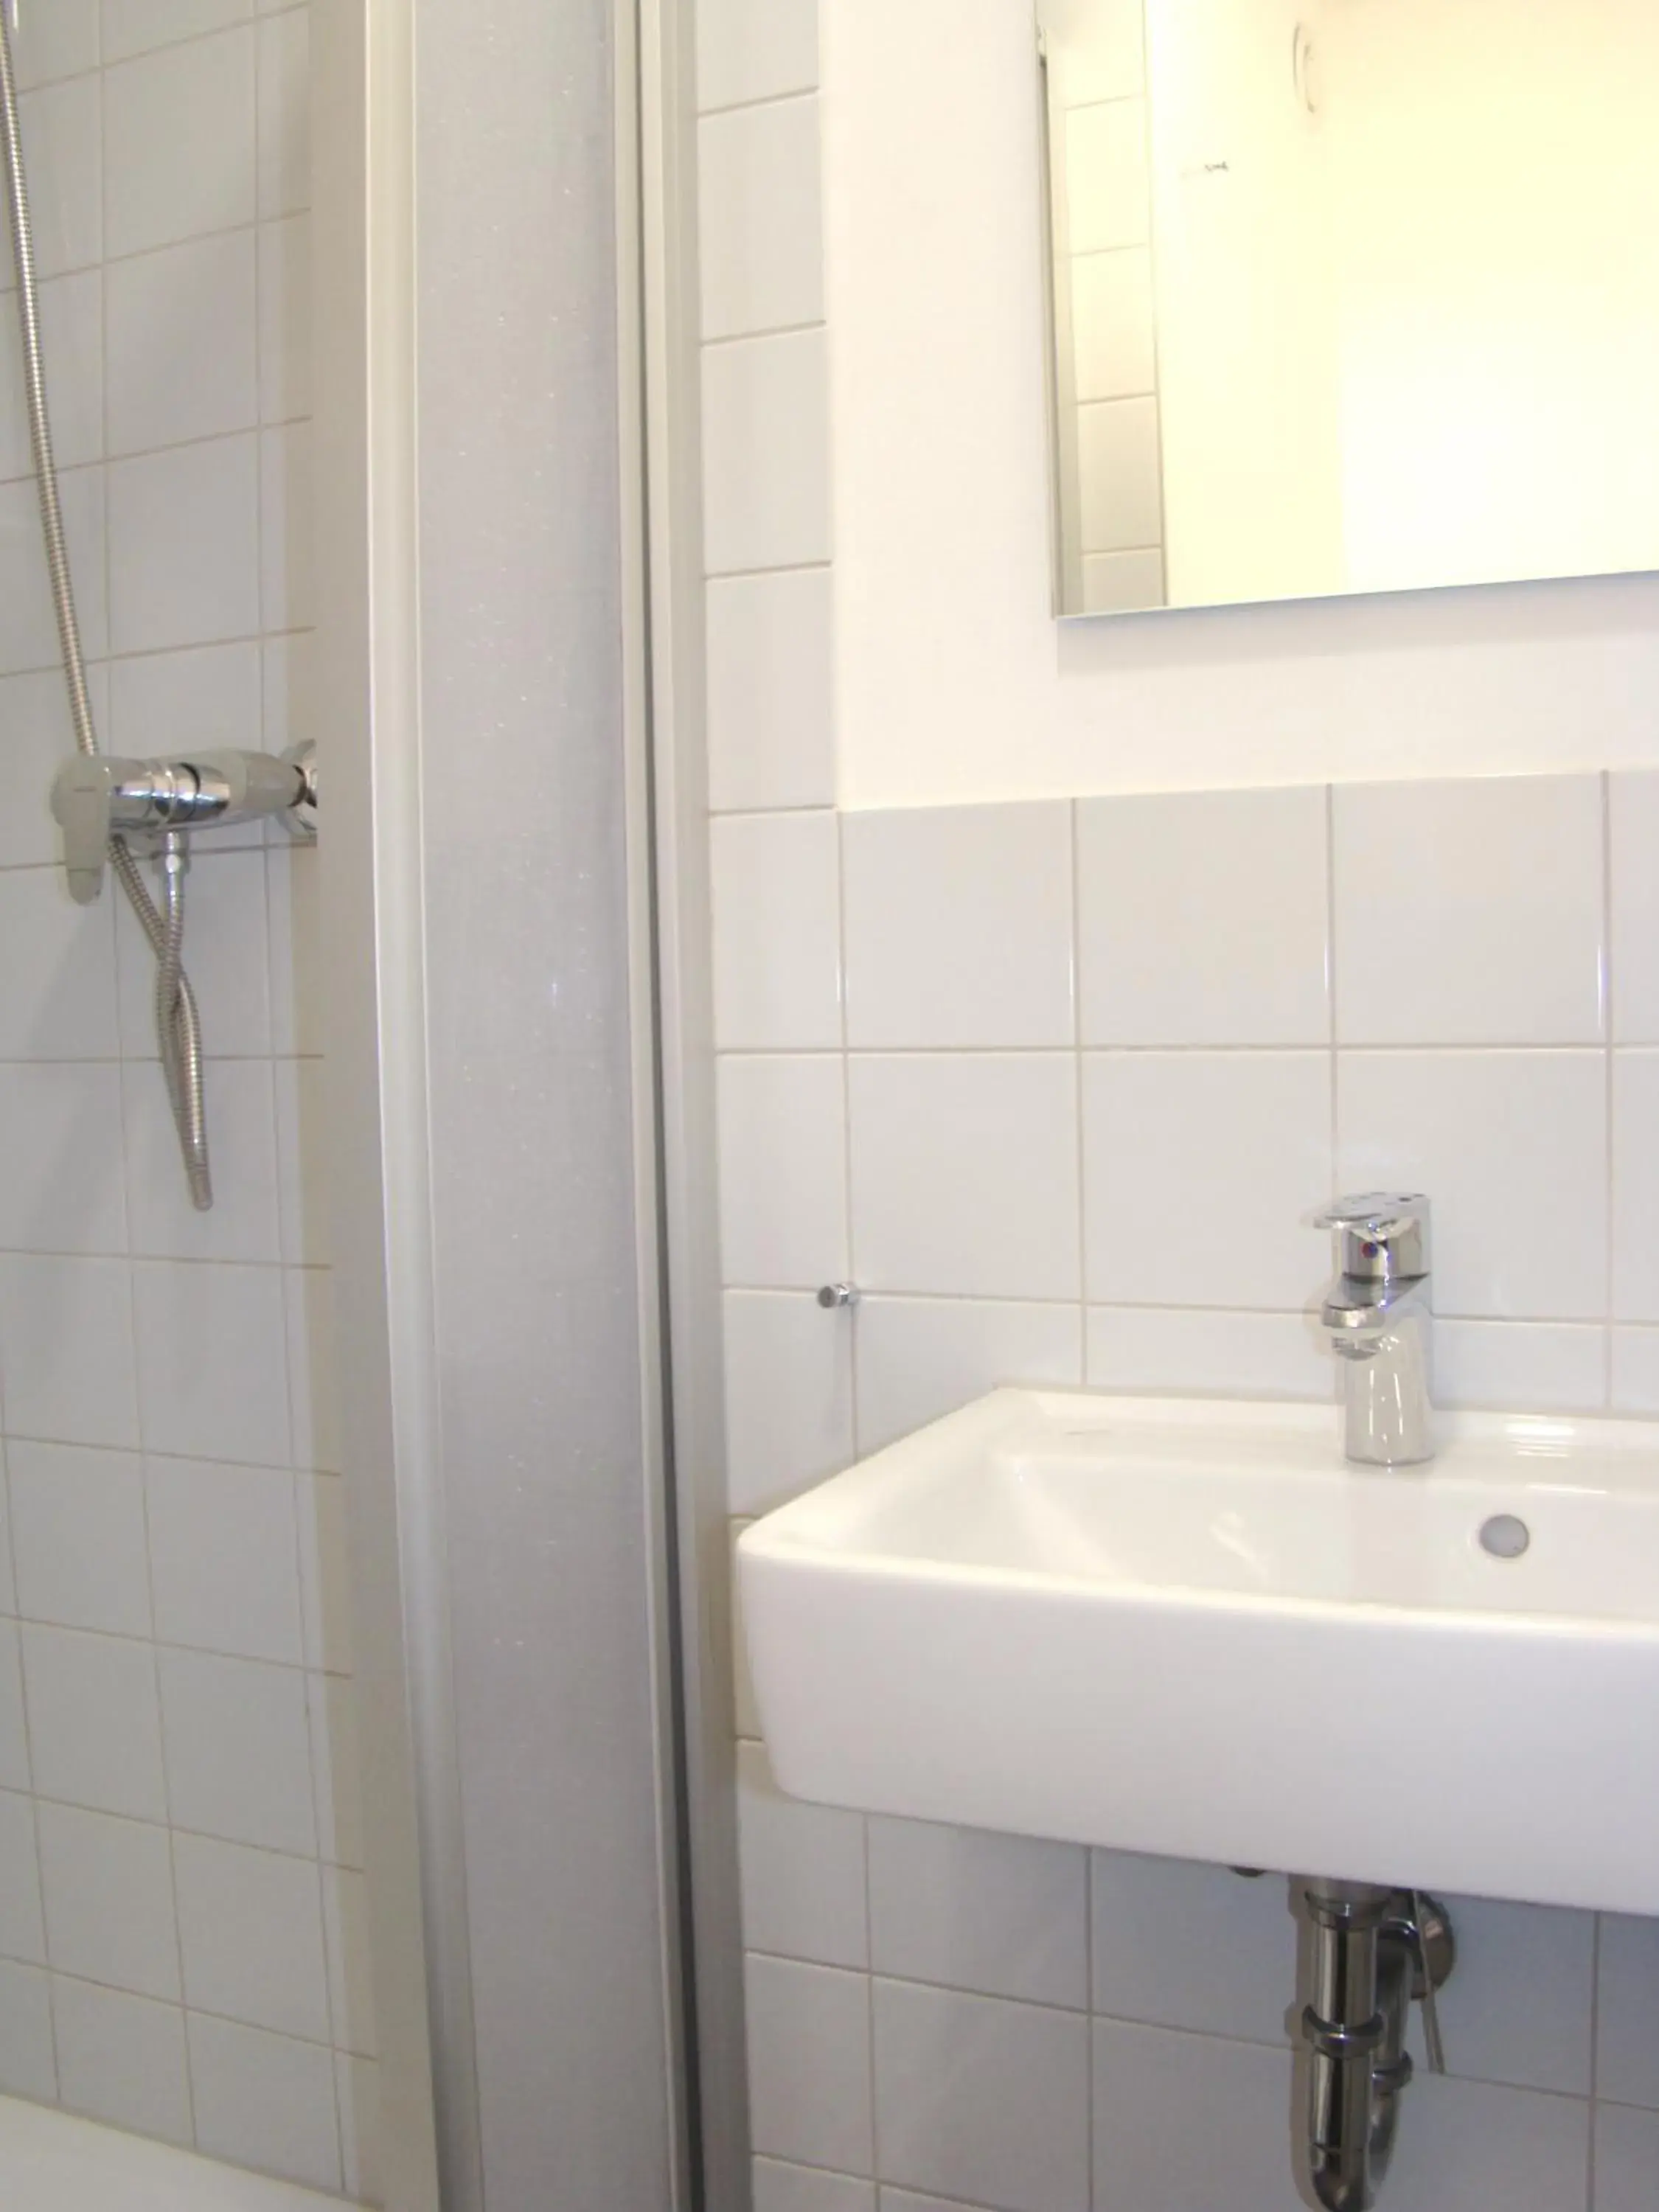 Area and facilities, Bathroom in BNB near Brandenburg Gate - Rooms & Apartments